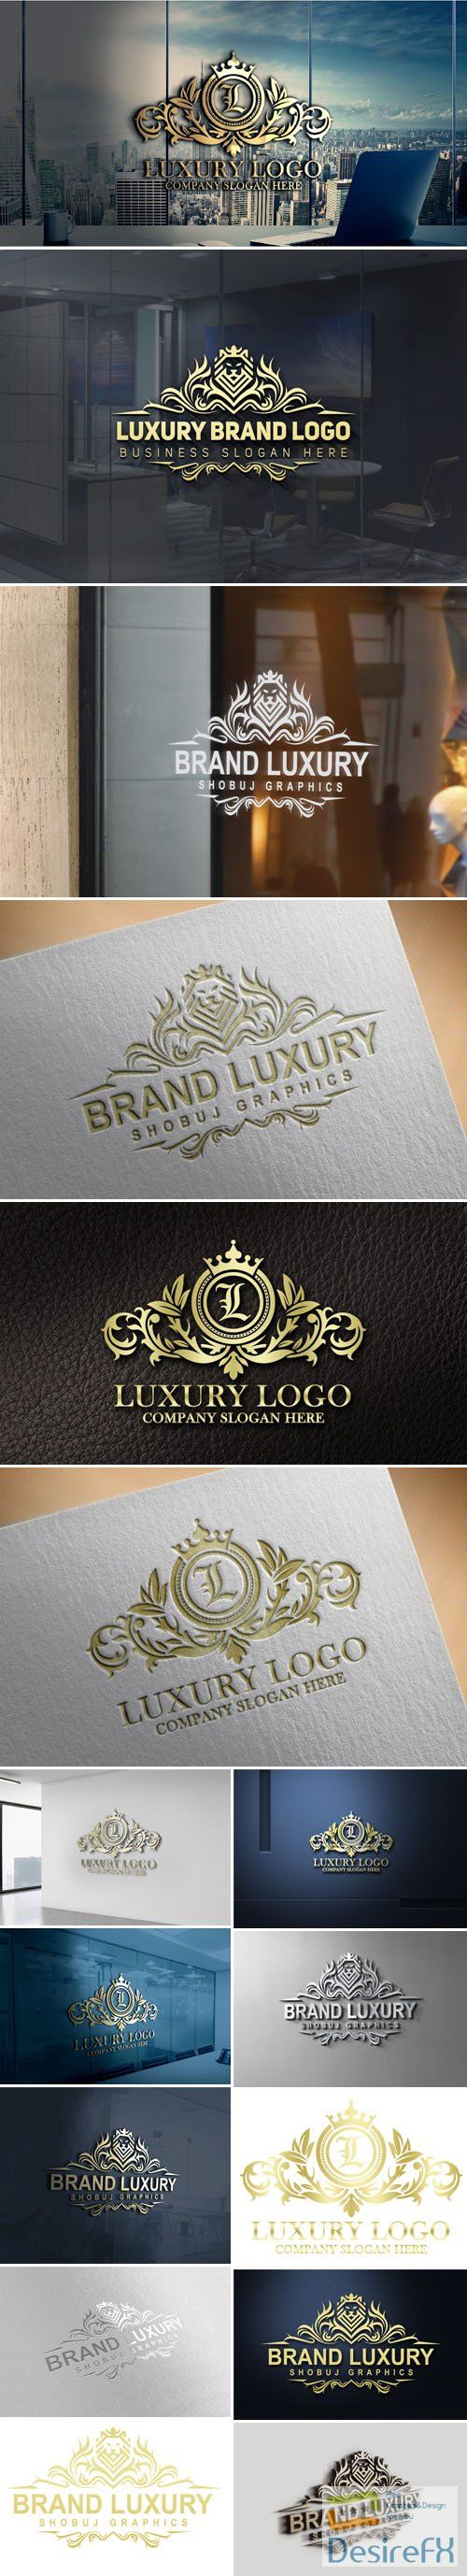 Modern Luxury Brand Logo Design PSD Mockups Templates